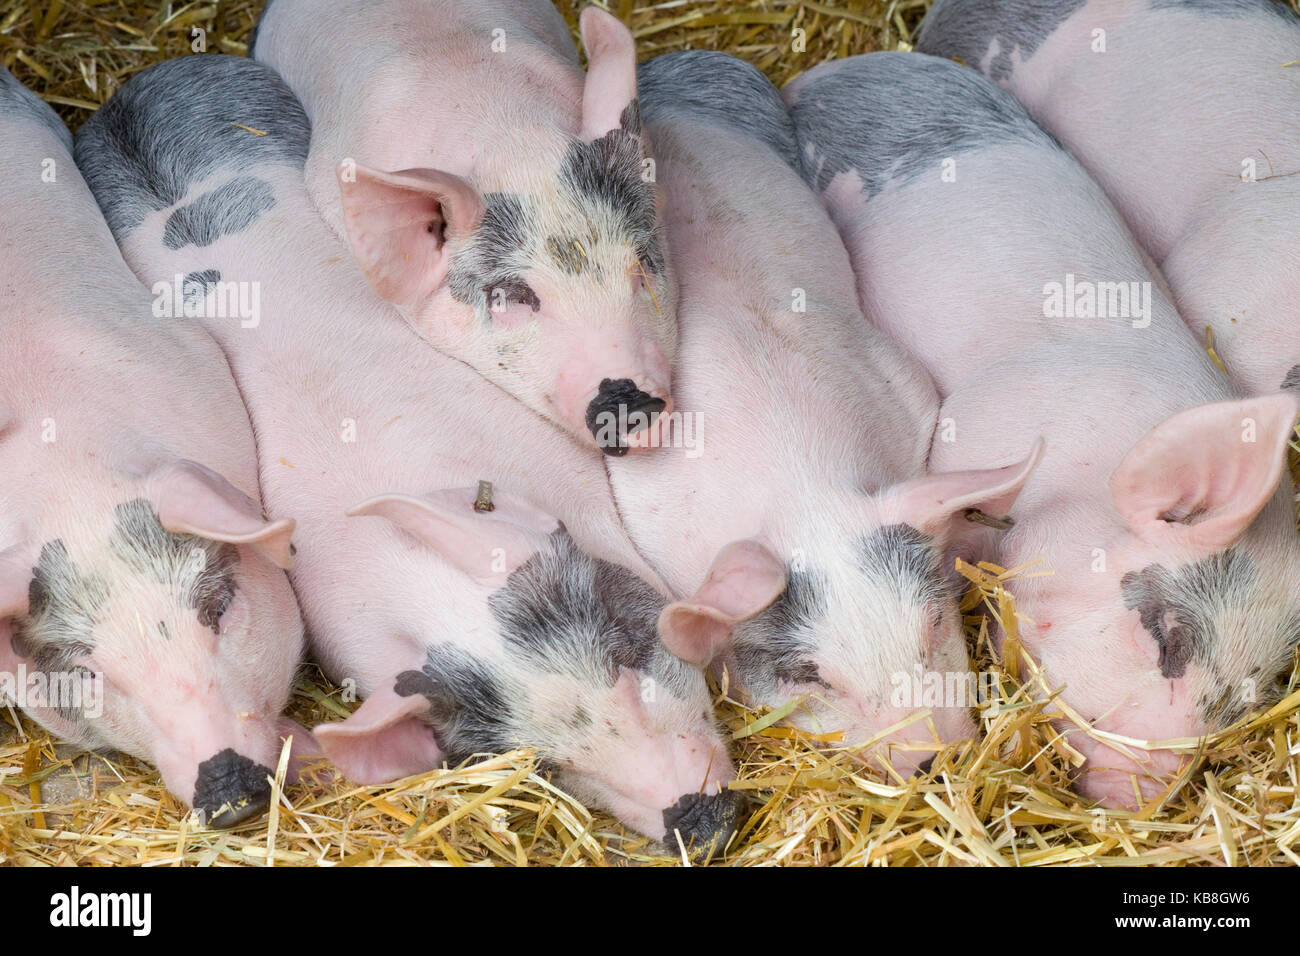 white cross piglets sleeping on straw Stock Photo